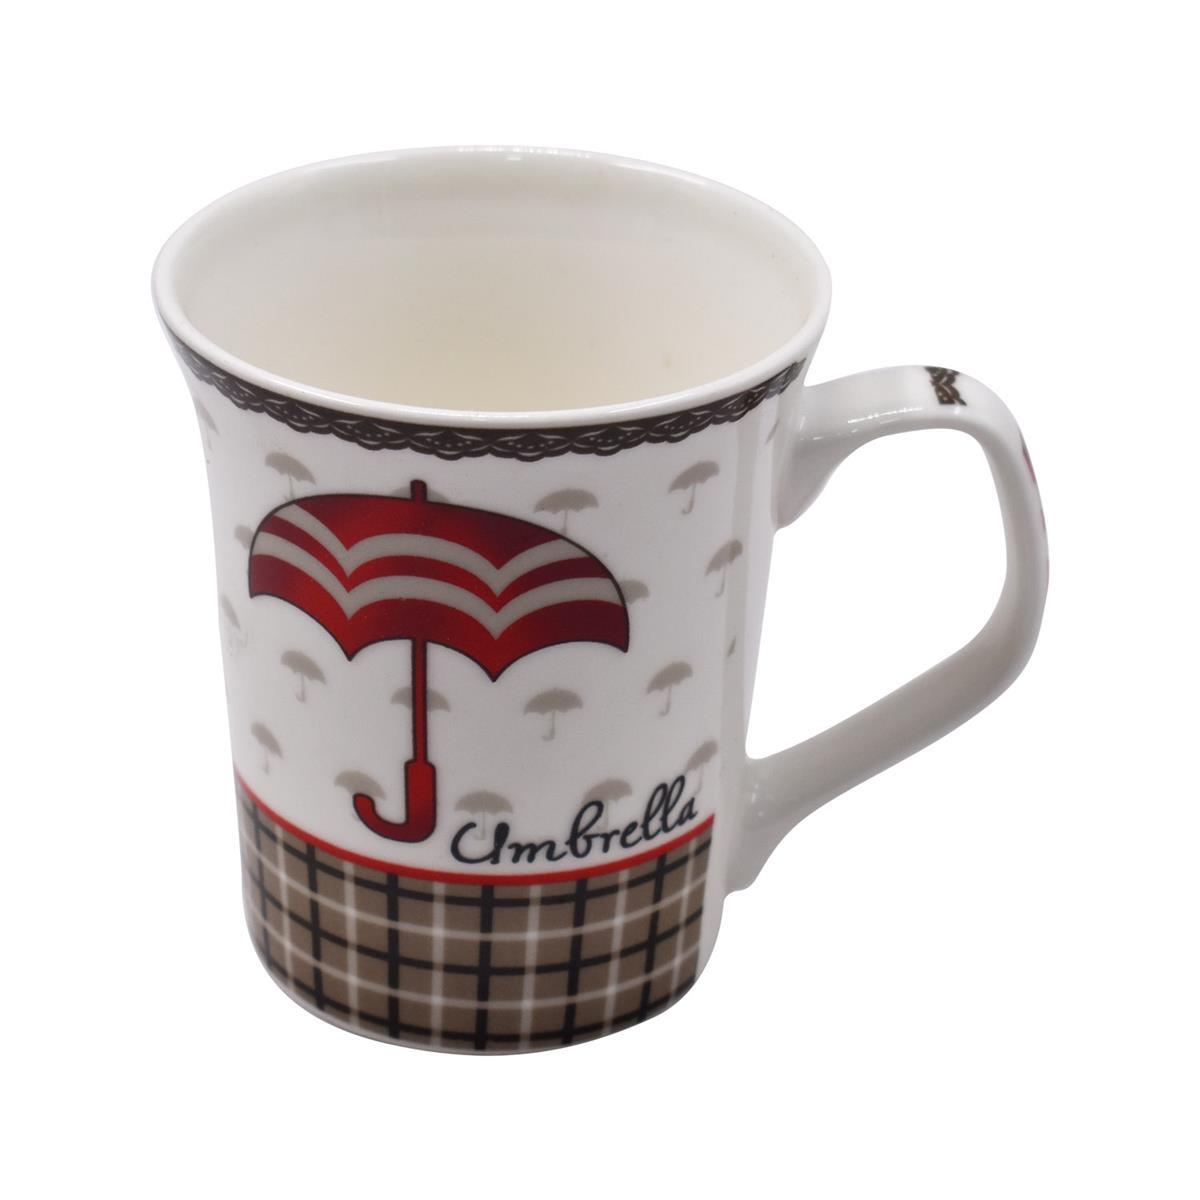 Printed Ceramic Tall Coffee or Tea Mug with handle - 325ml (3463-A)